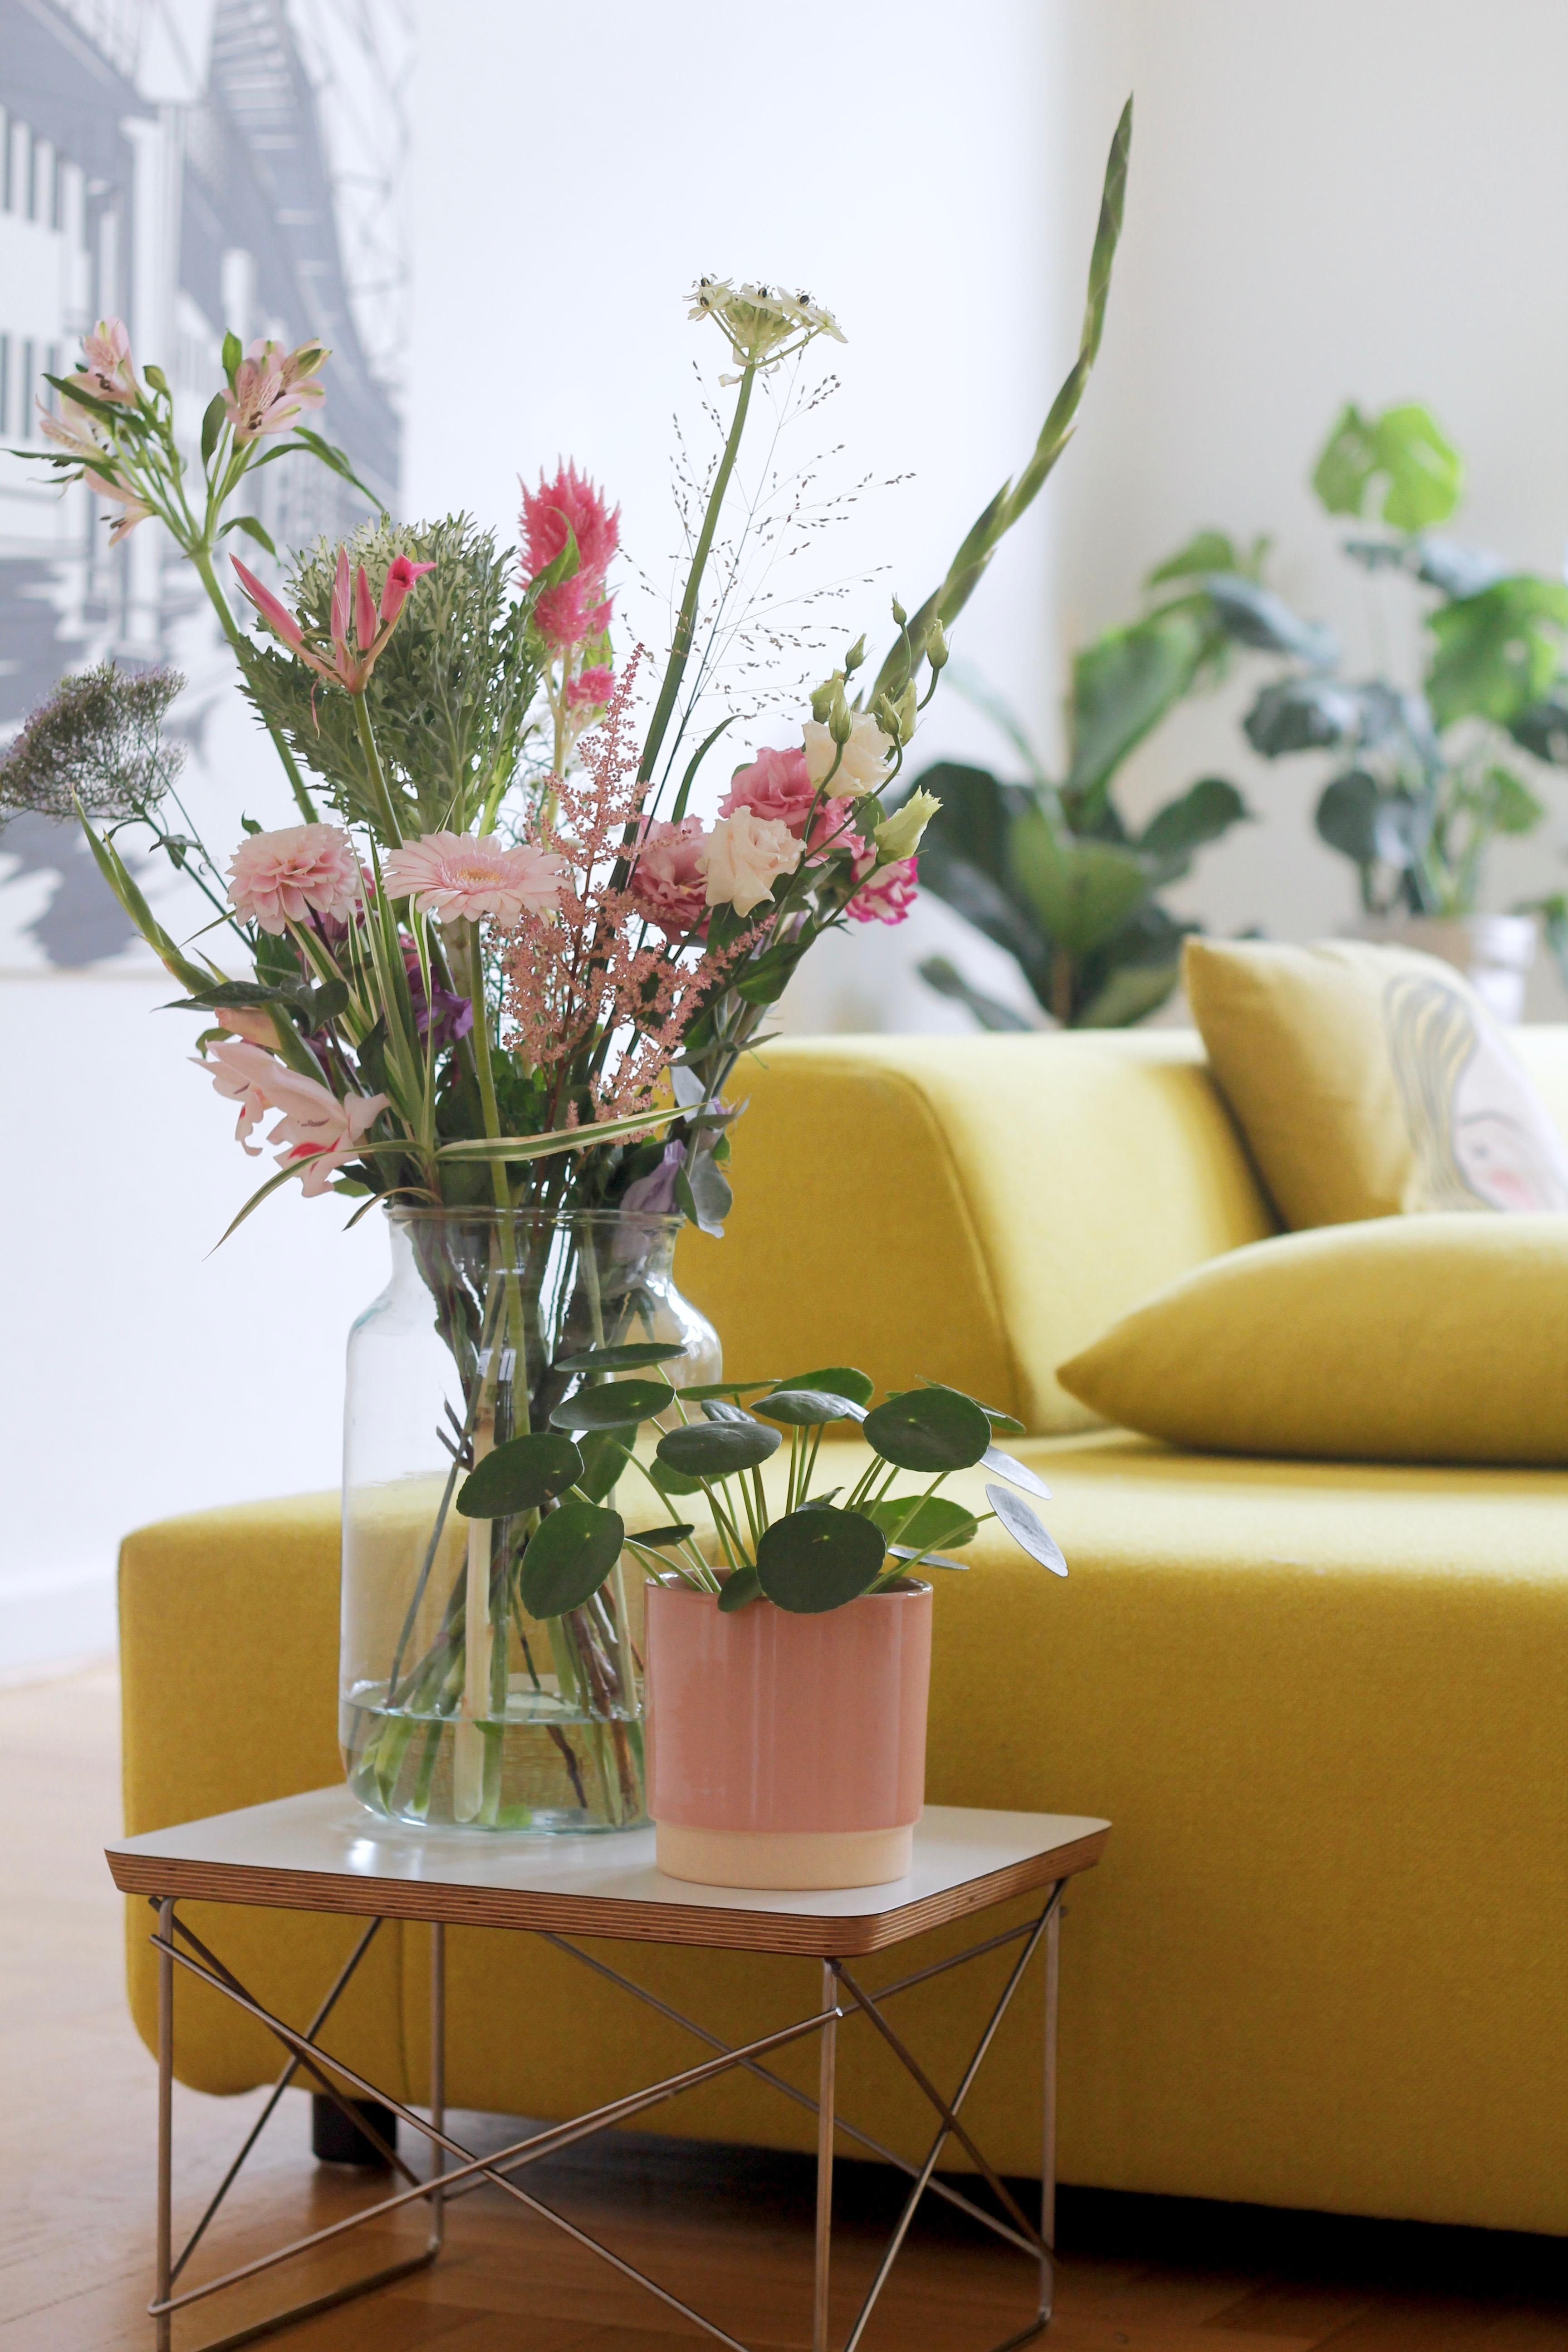 Fresh Flowers
#blumen #bloomon #rosa #wohnzimmer #sofa #urbanjungle